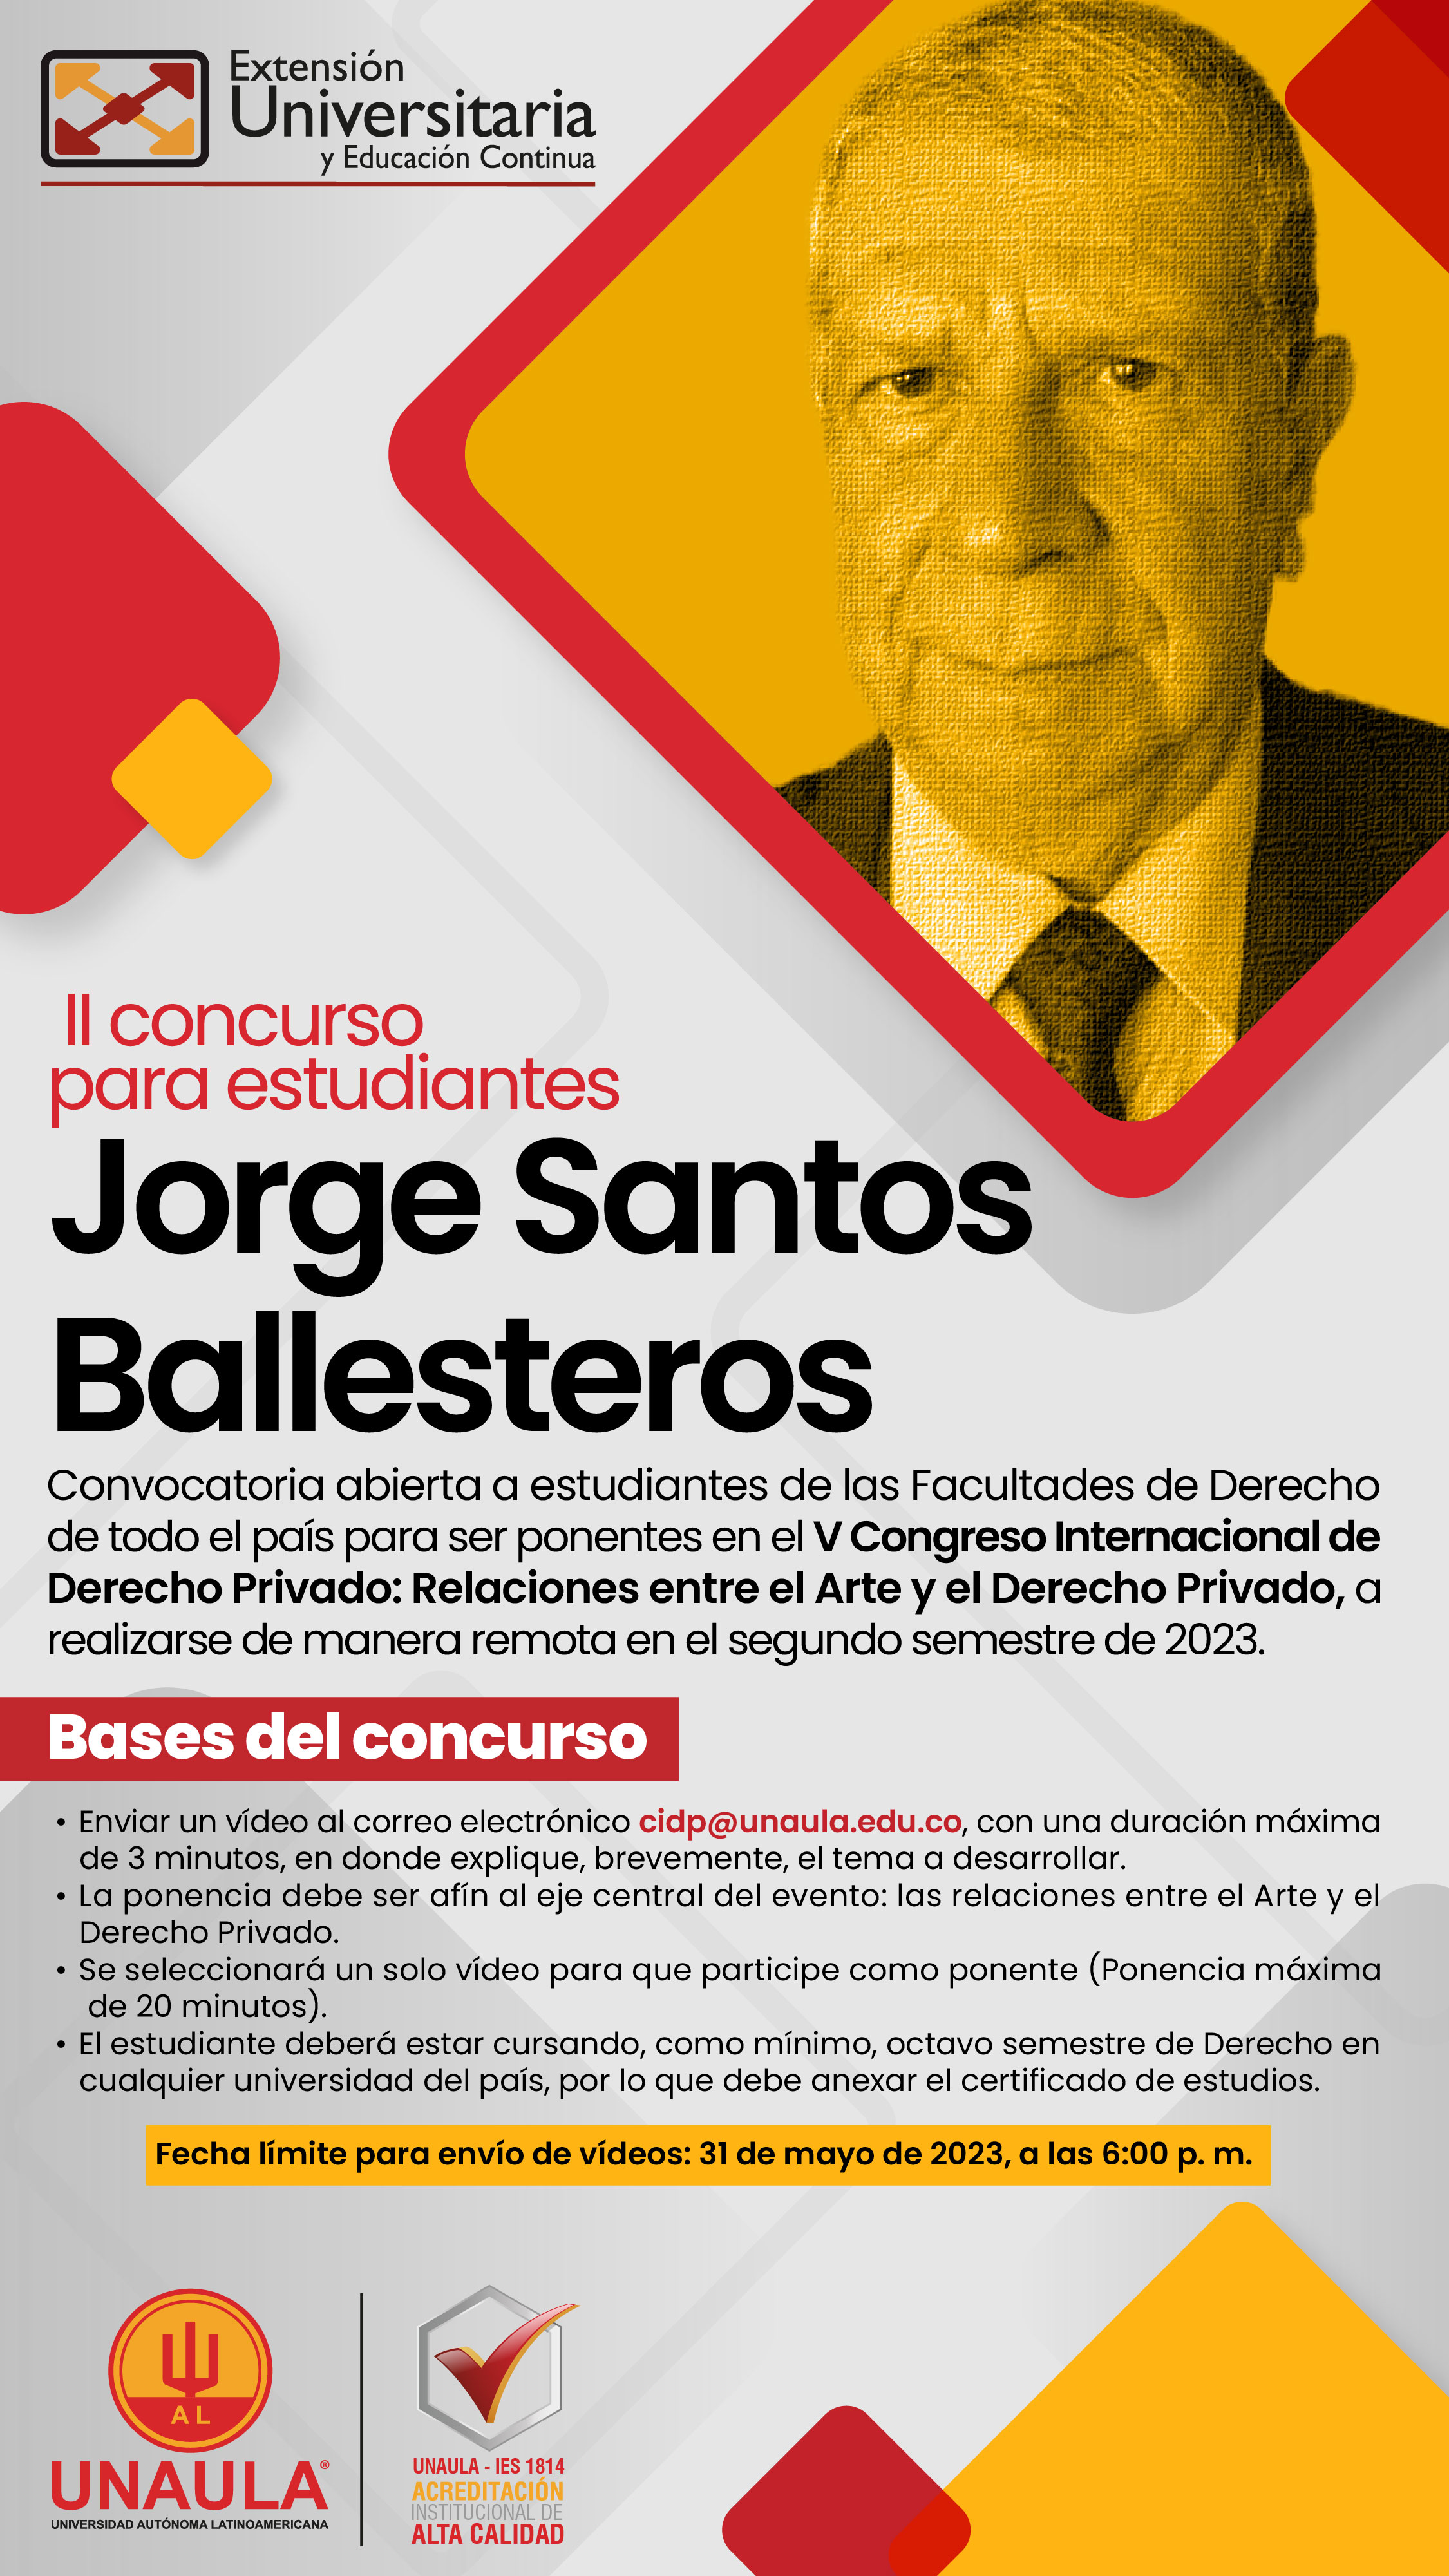 II Concurso para estudiantes Jorge Santos Ballesteros